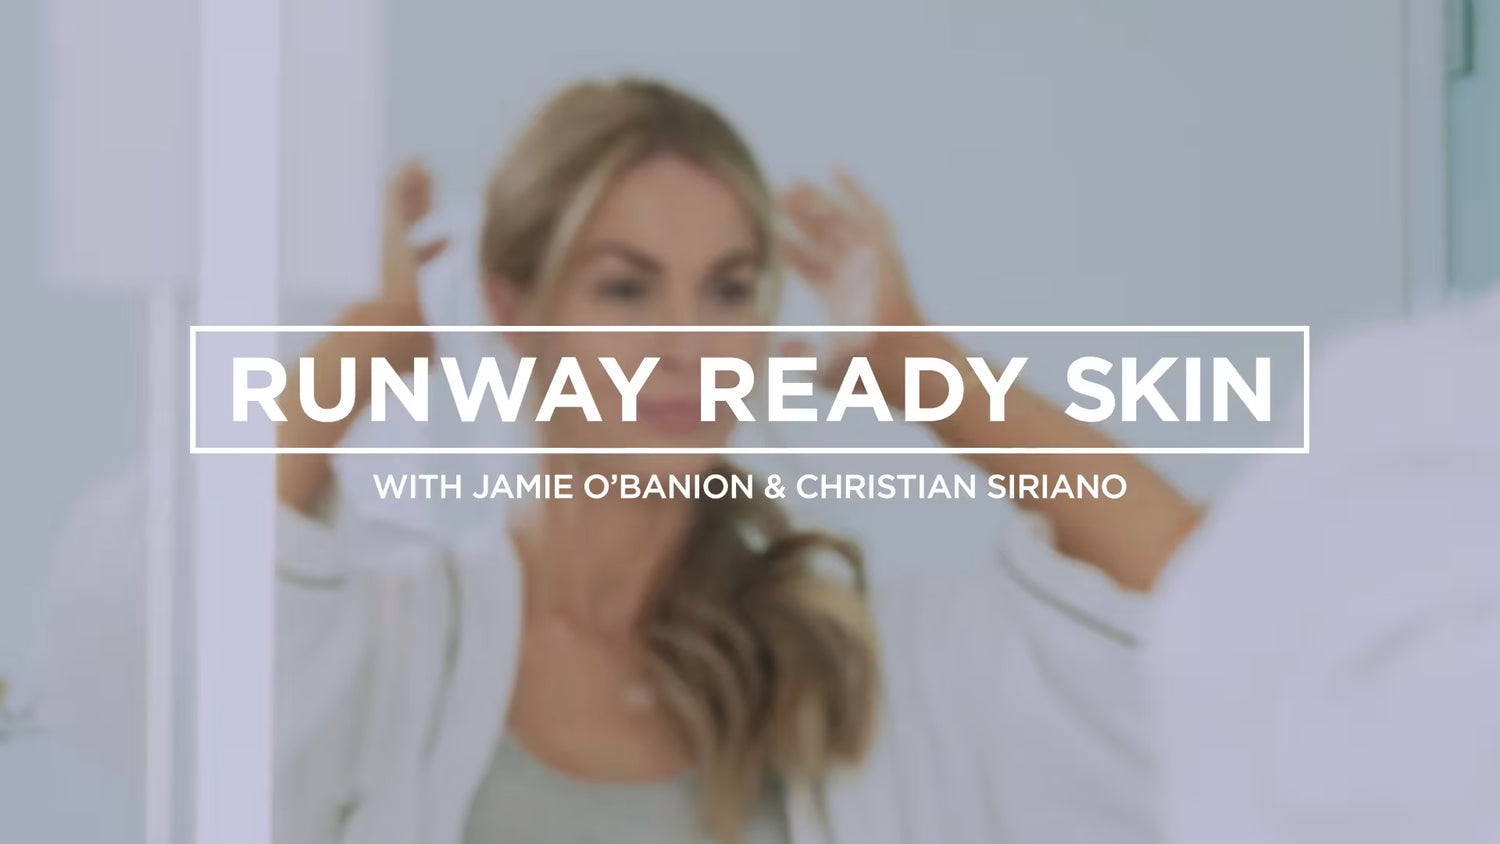 Runway Ready Skin With Jamie O'Banion & Christian Siriano